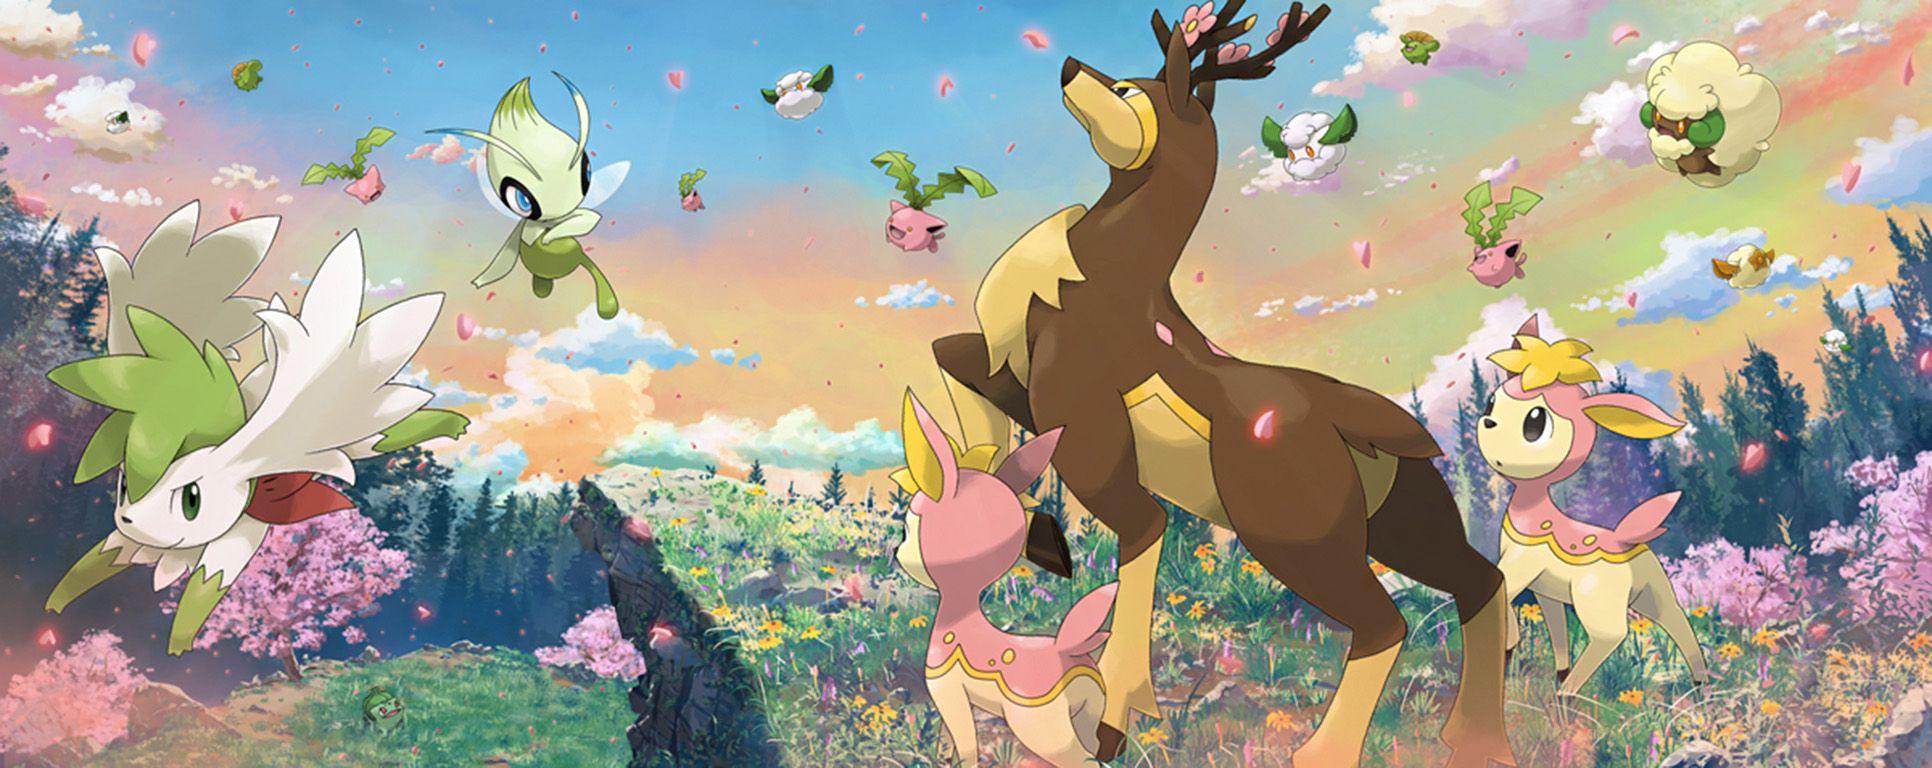 Grass Pokemon Wallpaper and Background Imagex768